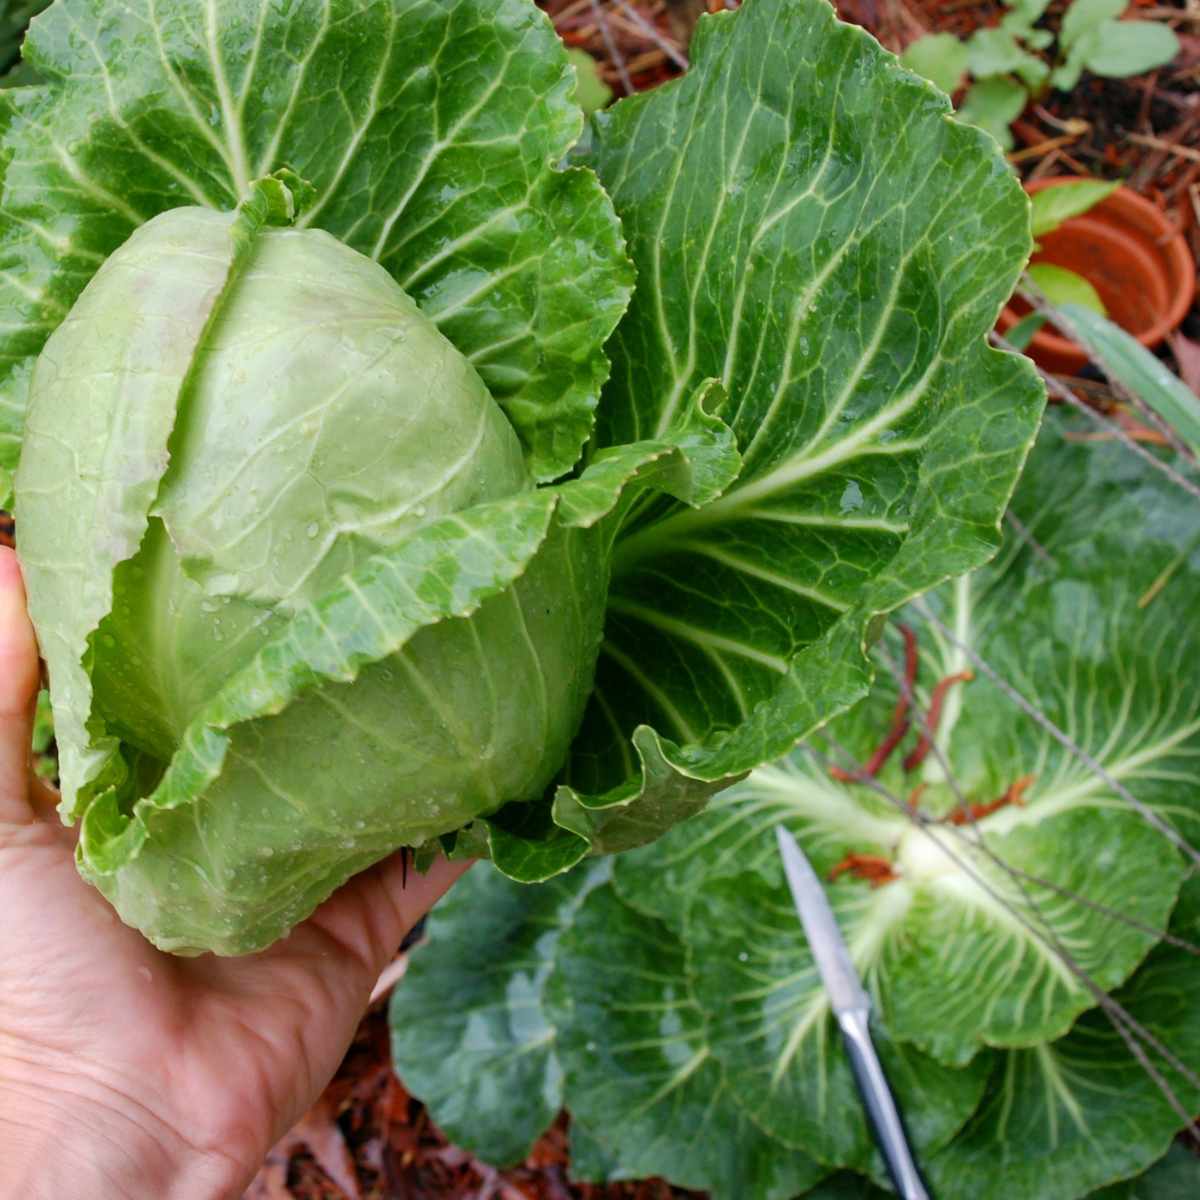 A hand holding copenhagen market cabbage.